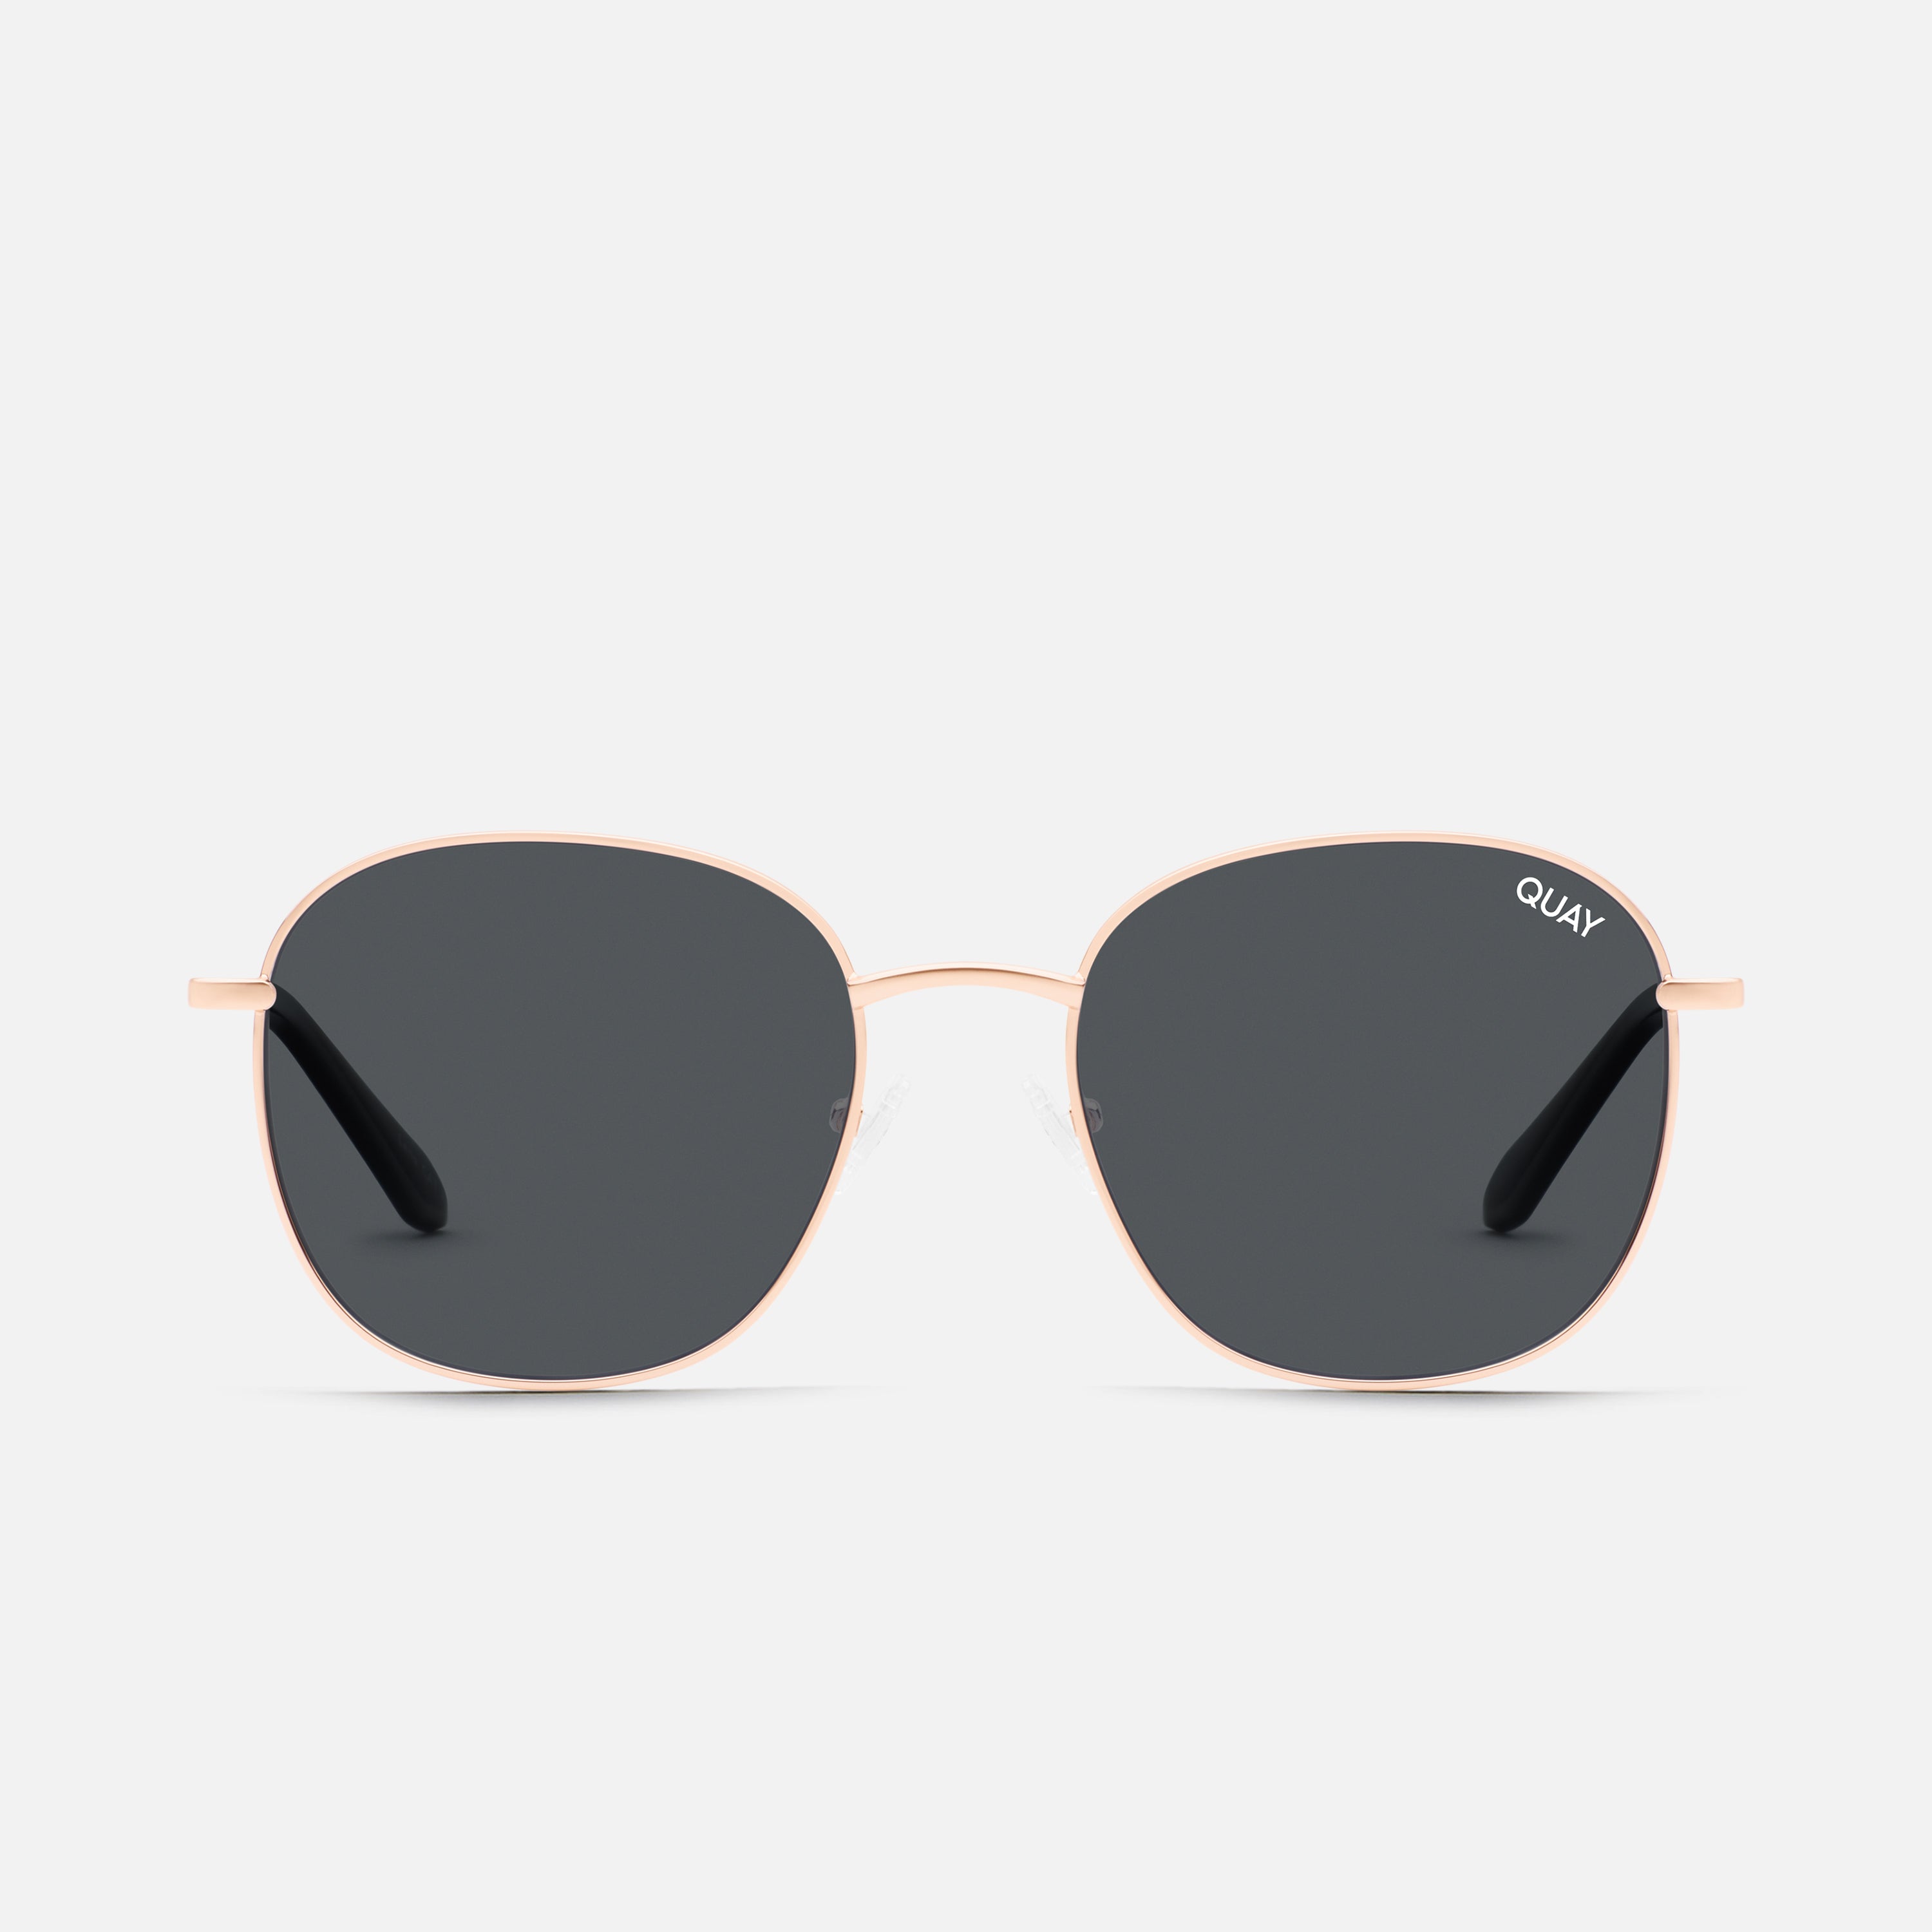 Quay High Key sunglasses in black fade | ASOS